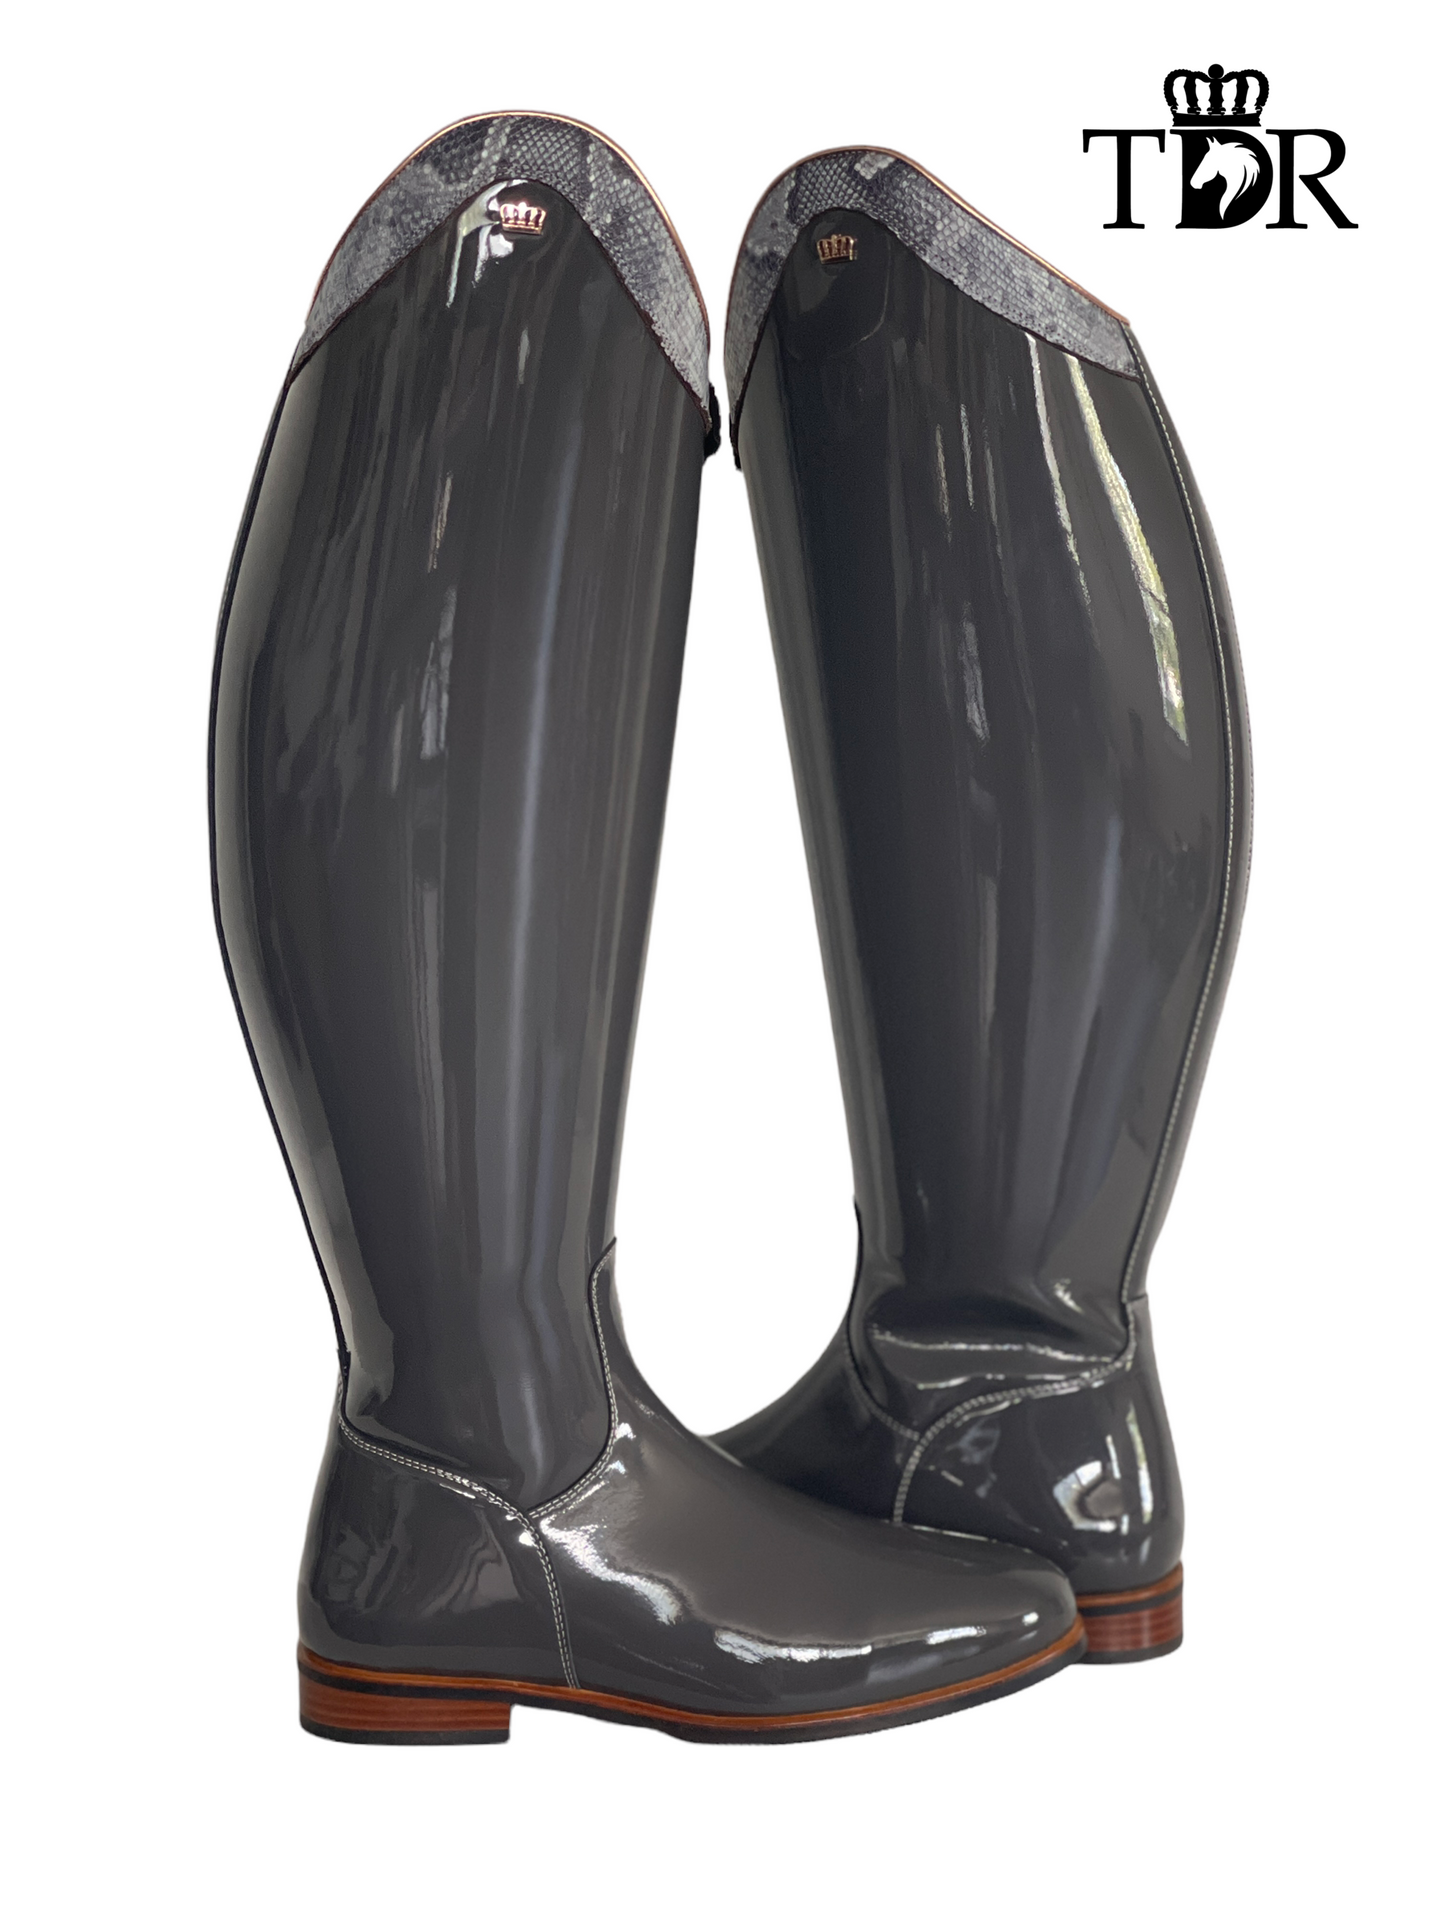 Kingsley WINTER Capri Dressage Boot (41.5 WIDE/MA/XXXL)